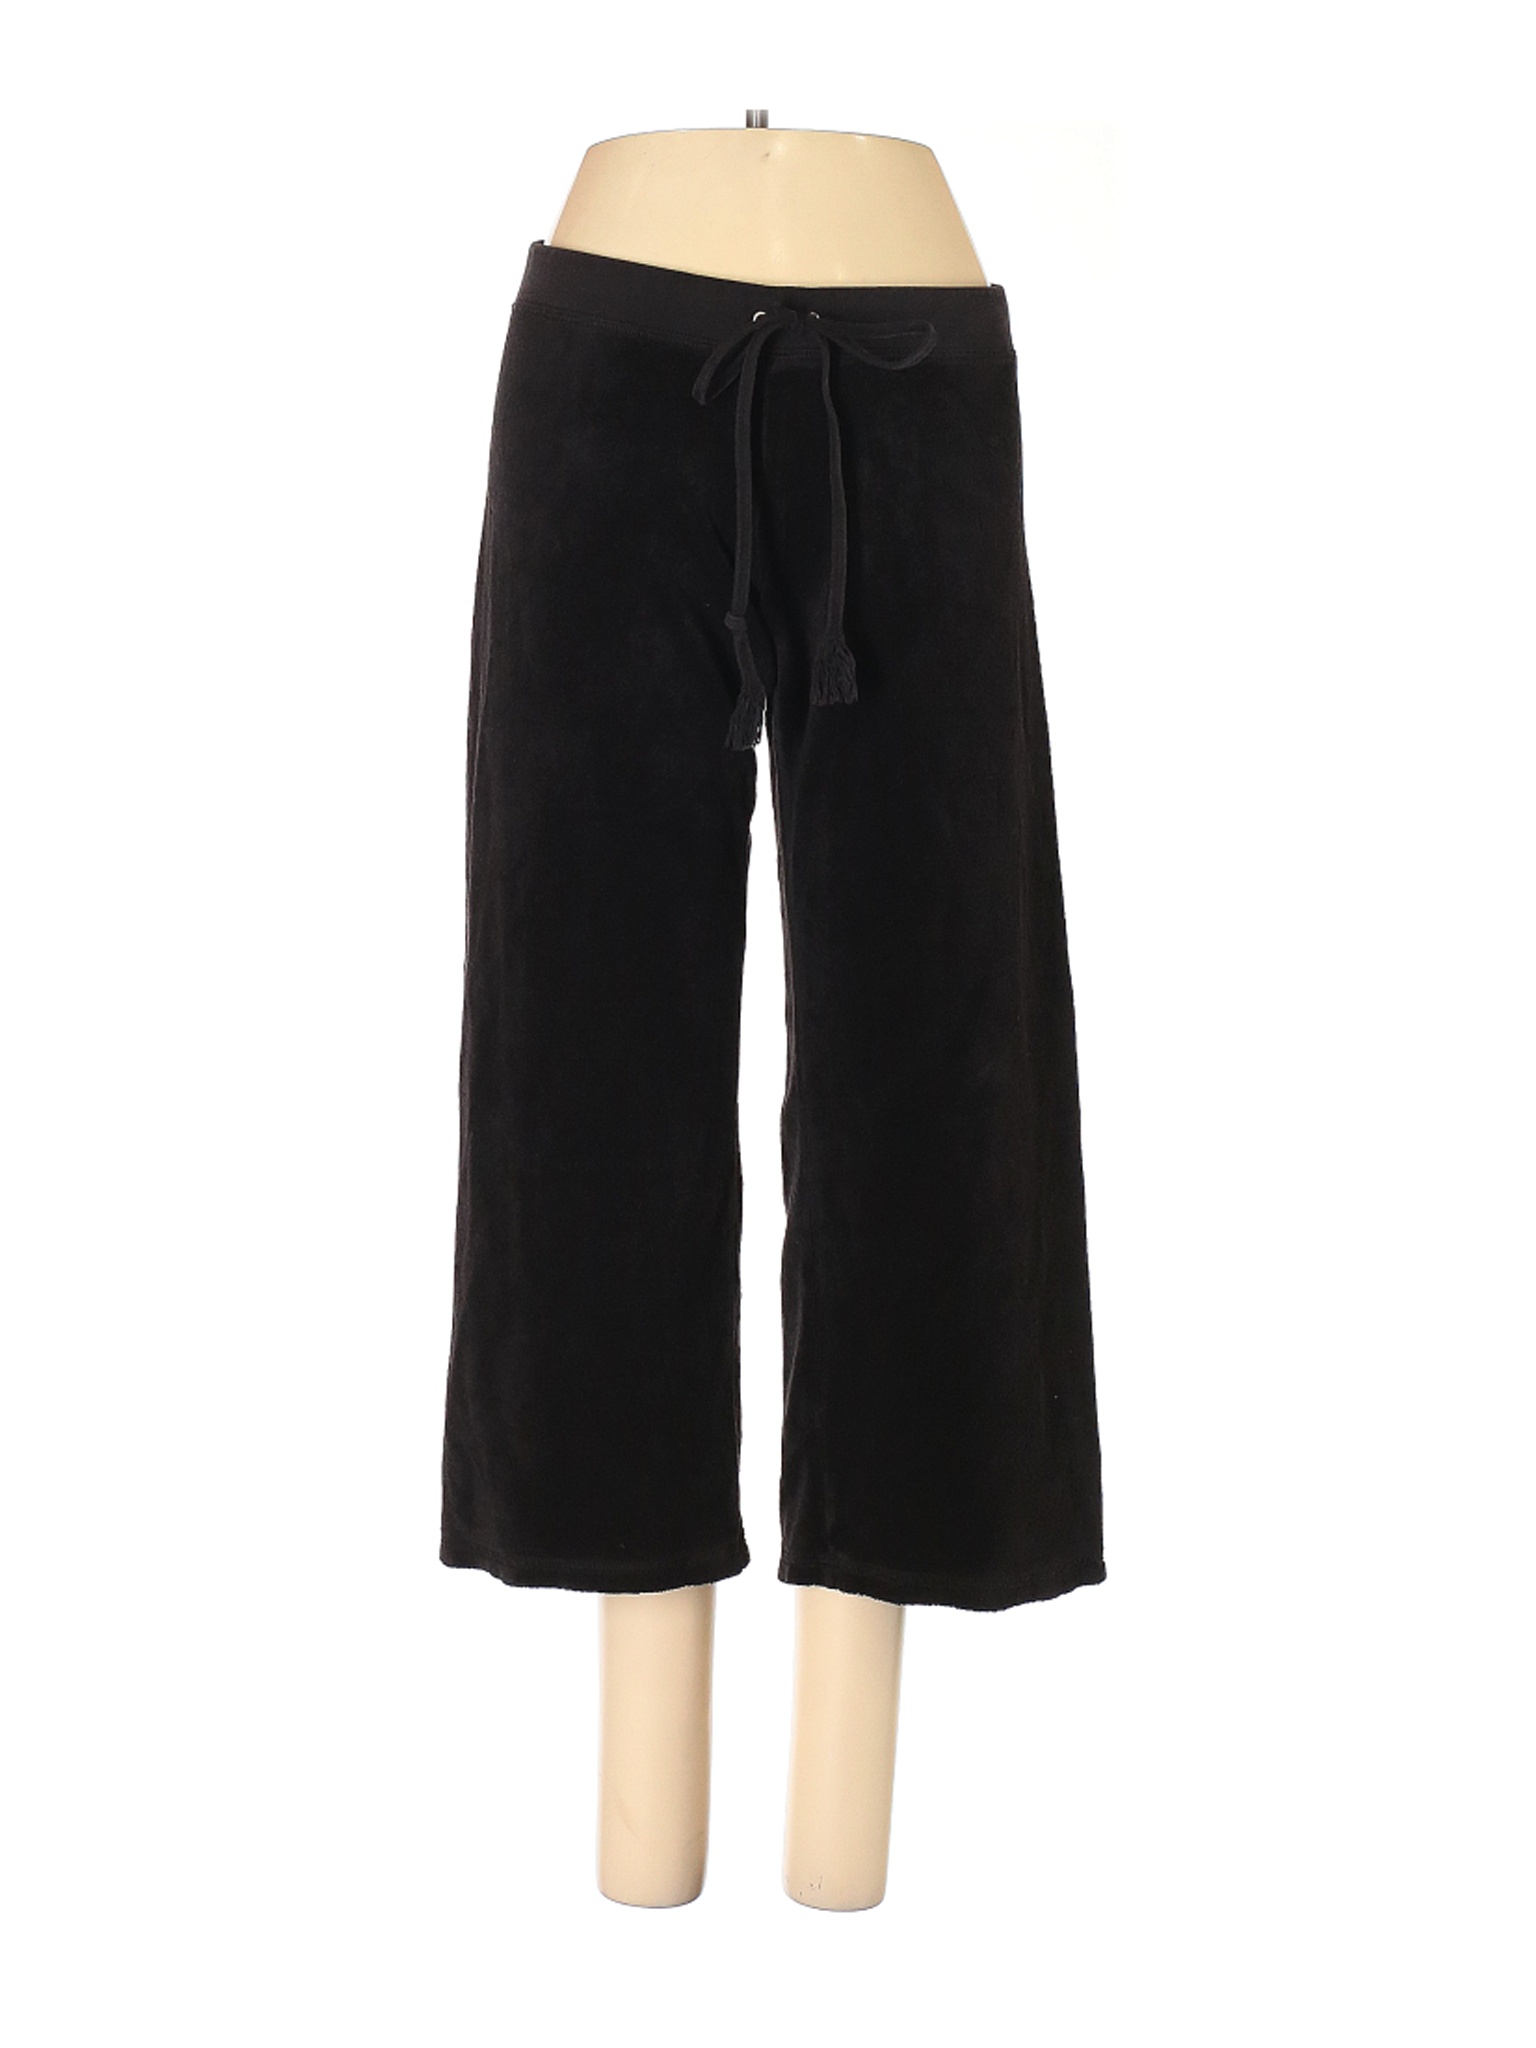 Juicy by Juicy Couture Women Black Sweatpants S | eBay